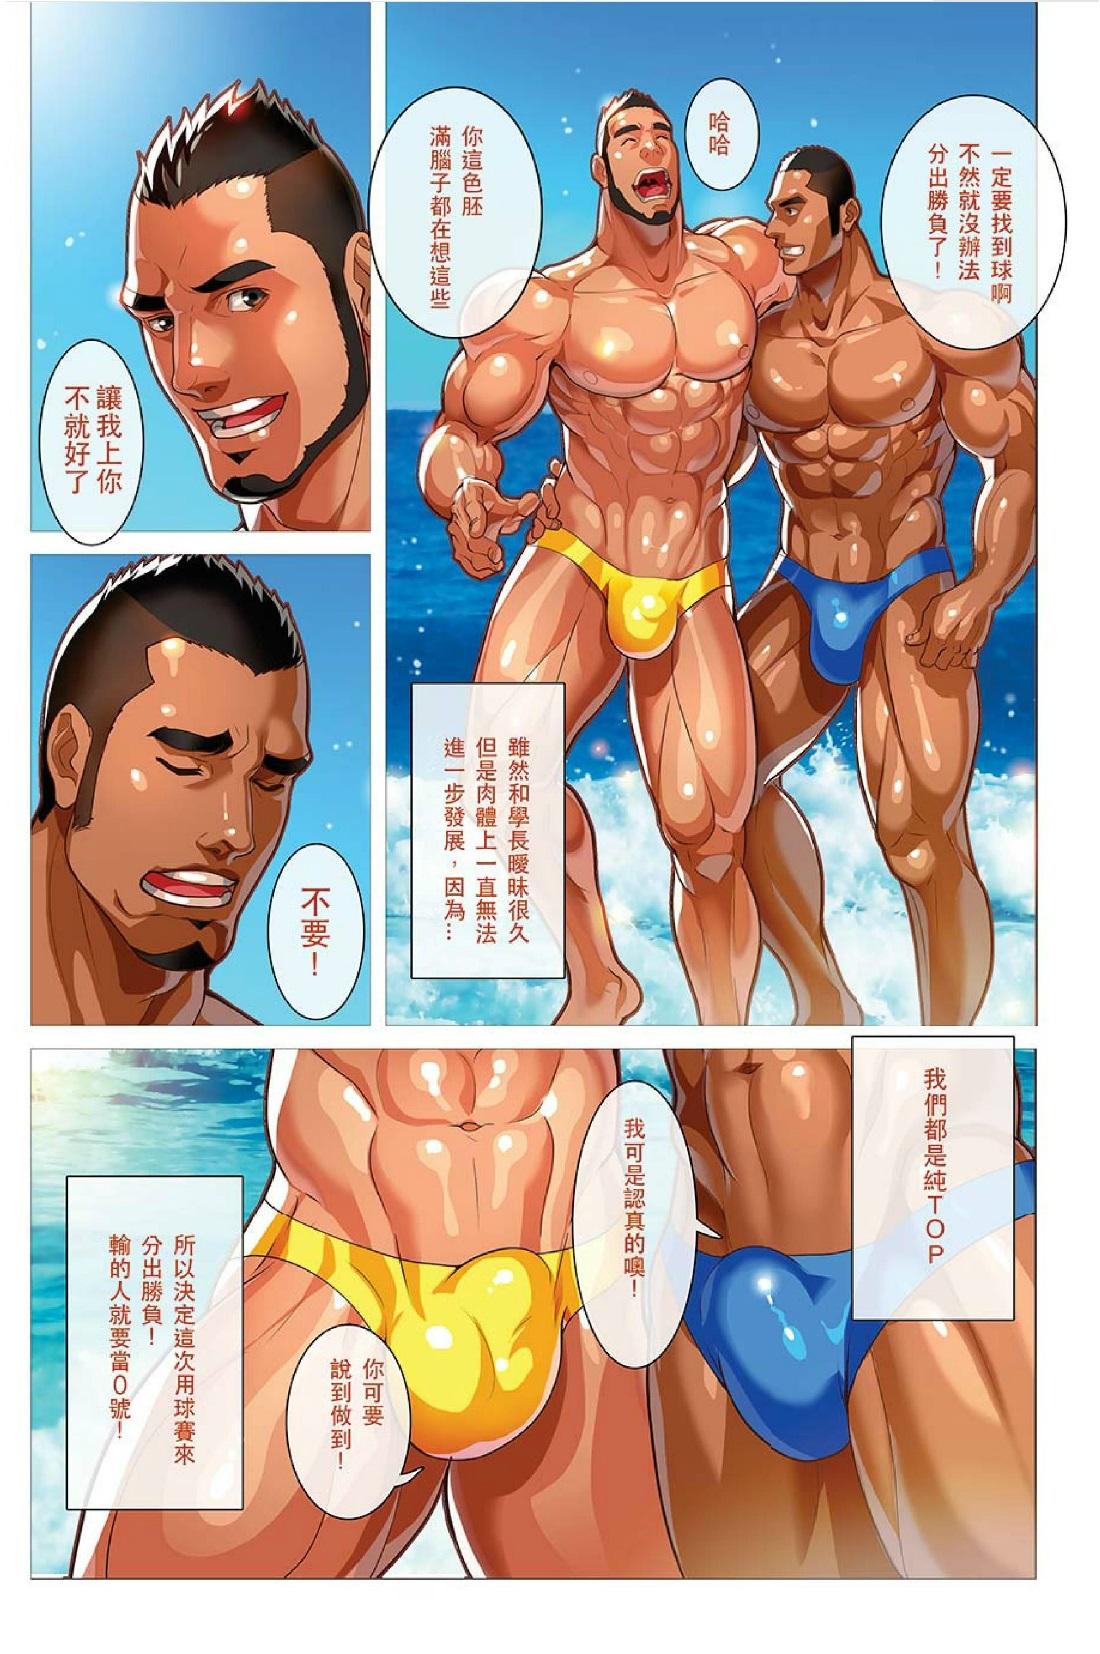 Internal 夏日男子筋肉潛艇堡 (Summer's end Muscle Heat - The Boys Of Summer 2015) by 大雄 (Da Sexy Xiong) + Bonus Prequel [CH] Neighbor - Page 4